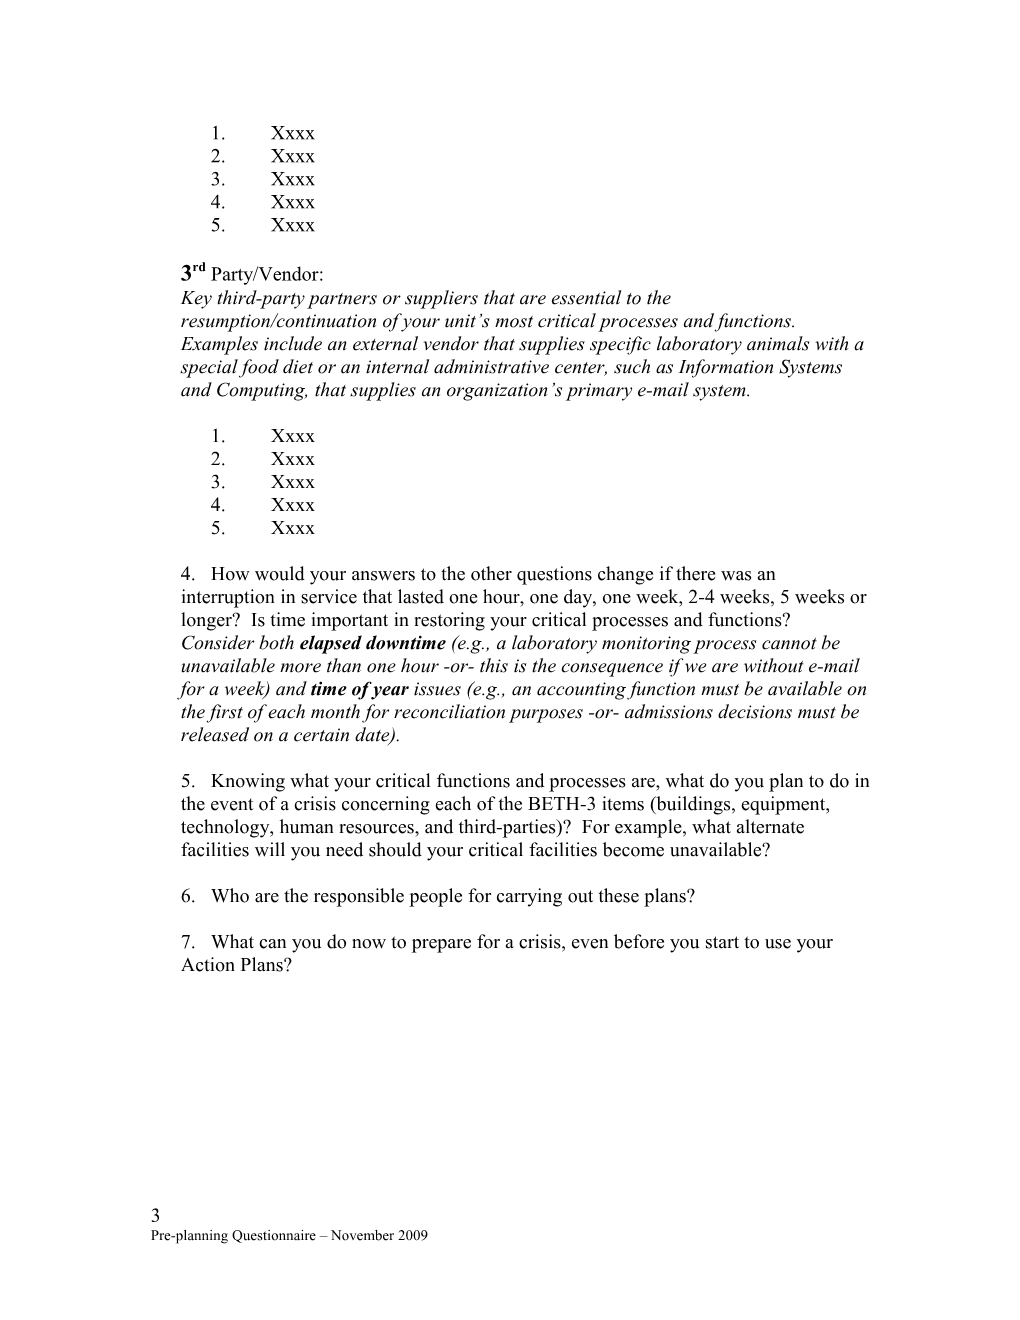 Mission Continuity Pre-Planning Questionnaire (PPQ)